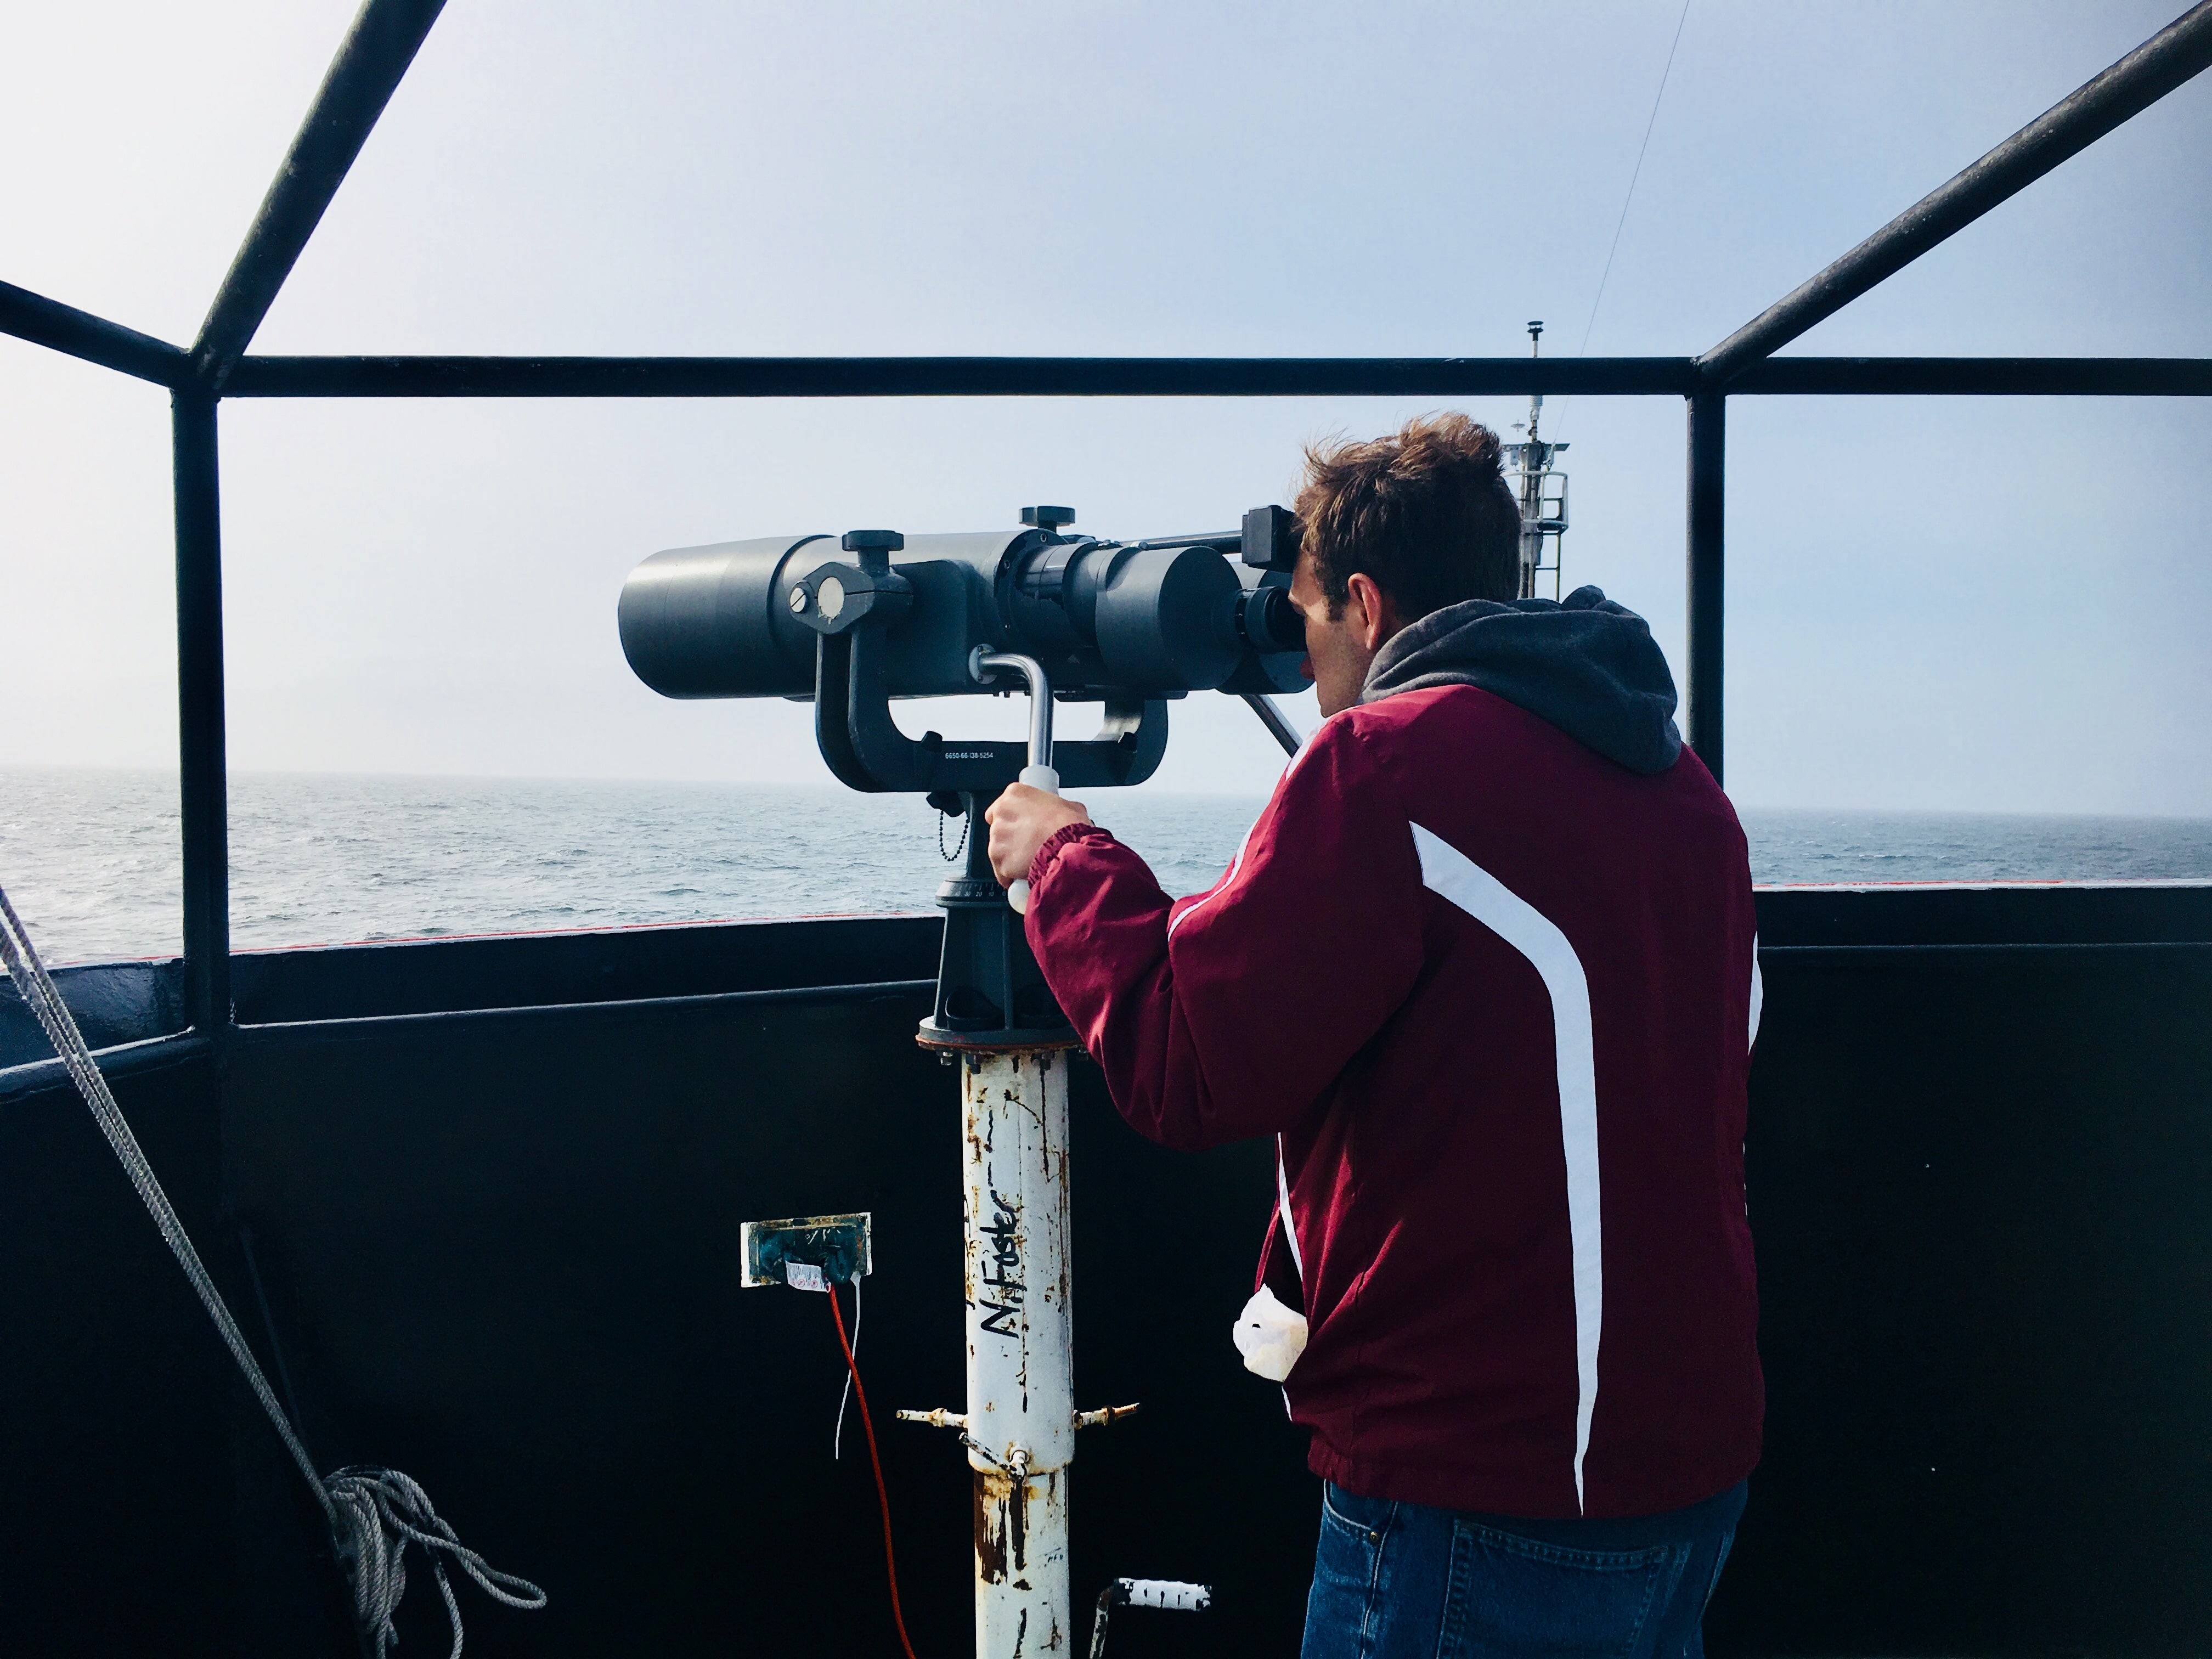 URI student Nick Housman scans for whales with Endeavor’s “big eye” binoculars